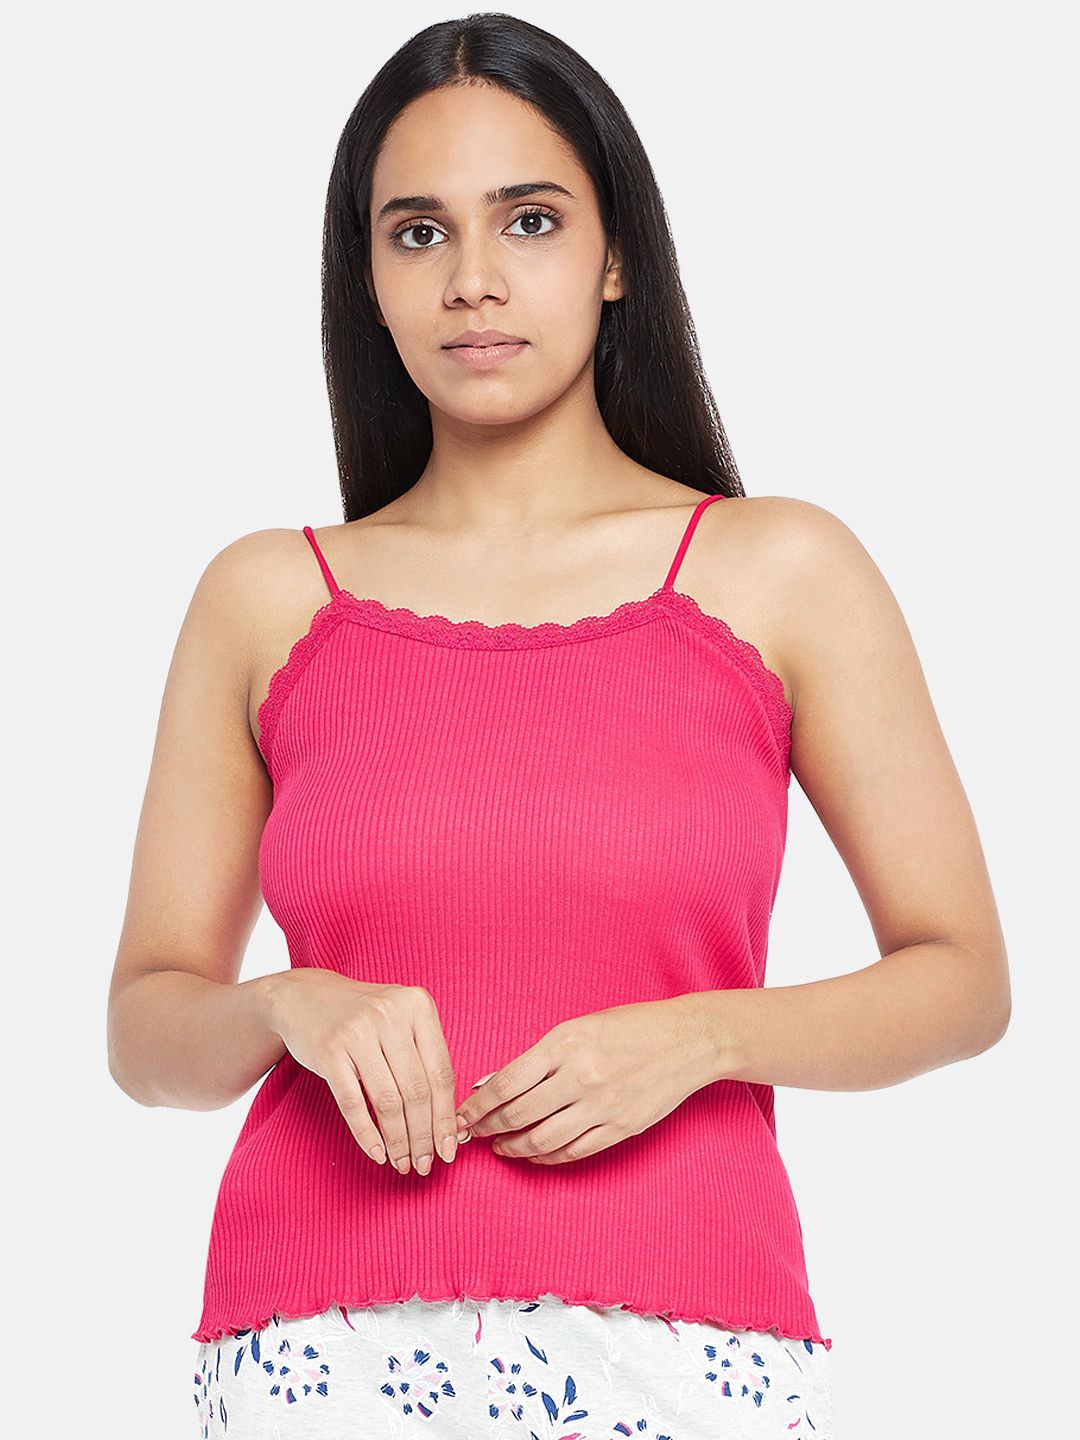 Dreamz by Pantaloons Pink Regular Lounge tshirt Price in India